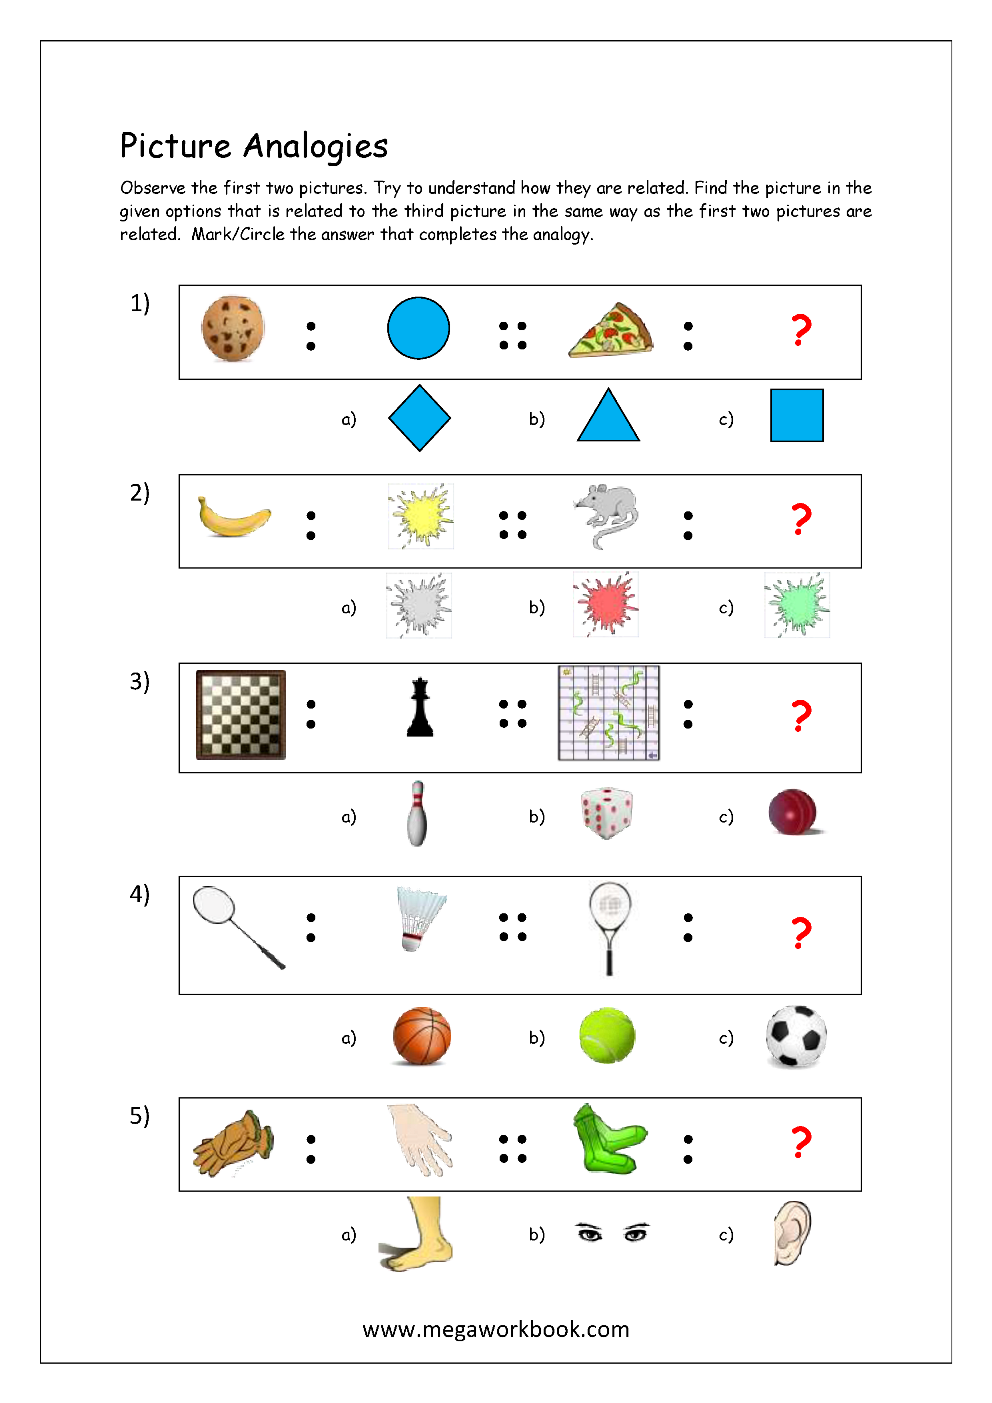 Free Printable Picture Analogy Worksheets - Logical Reasoning